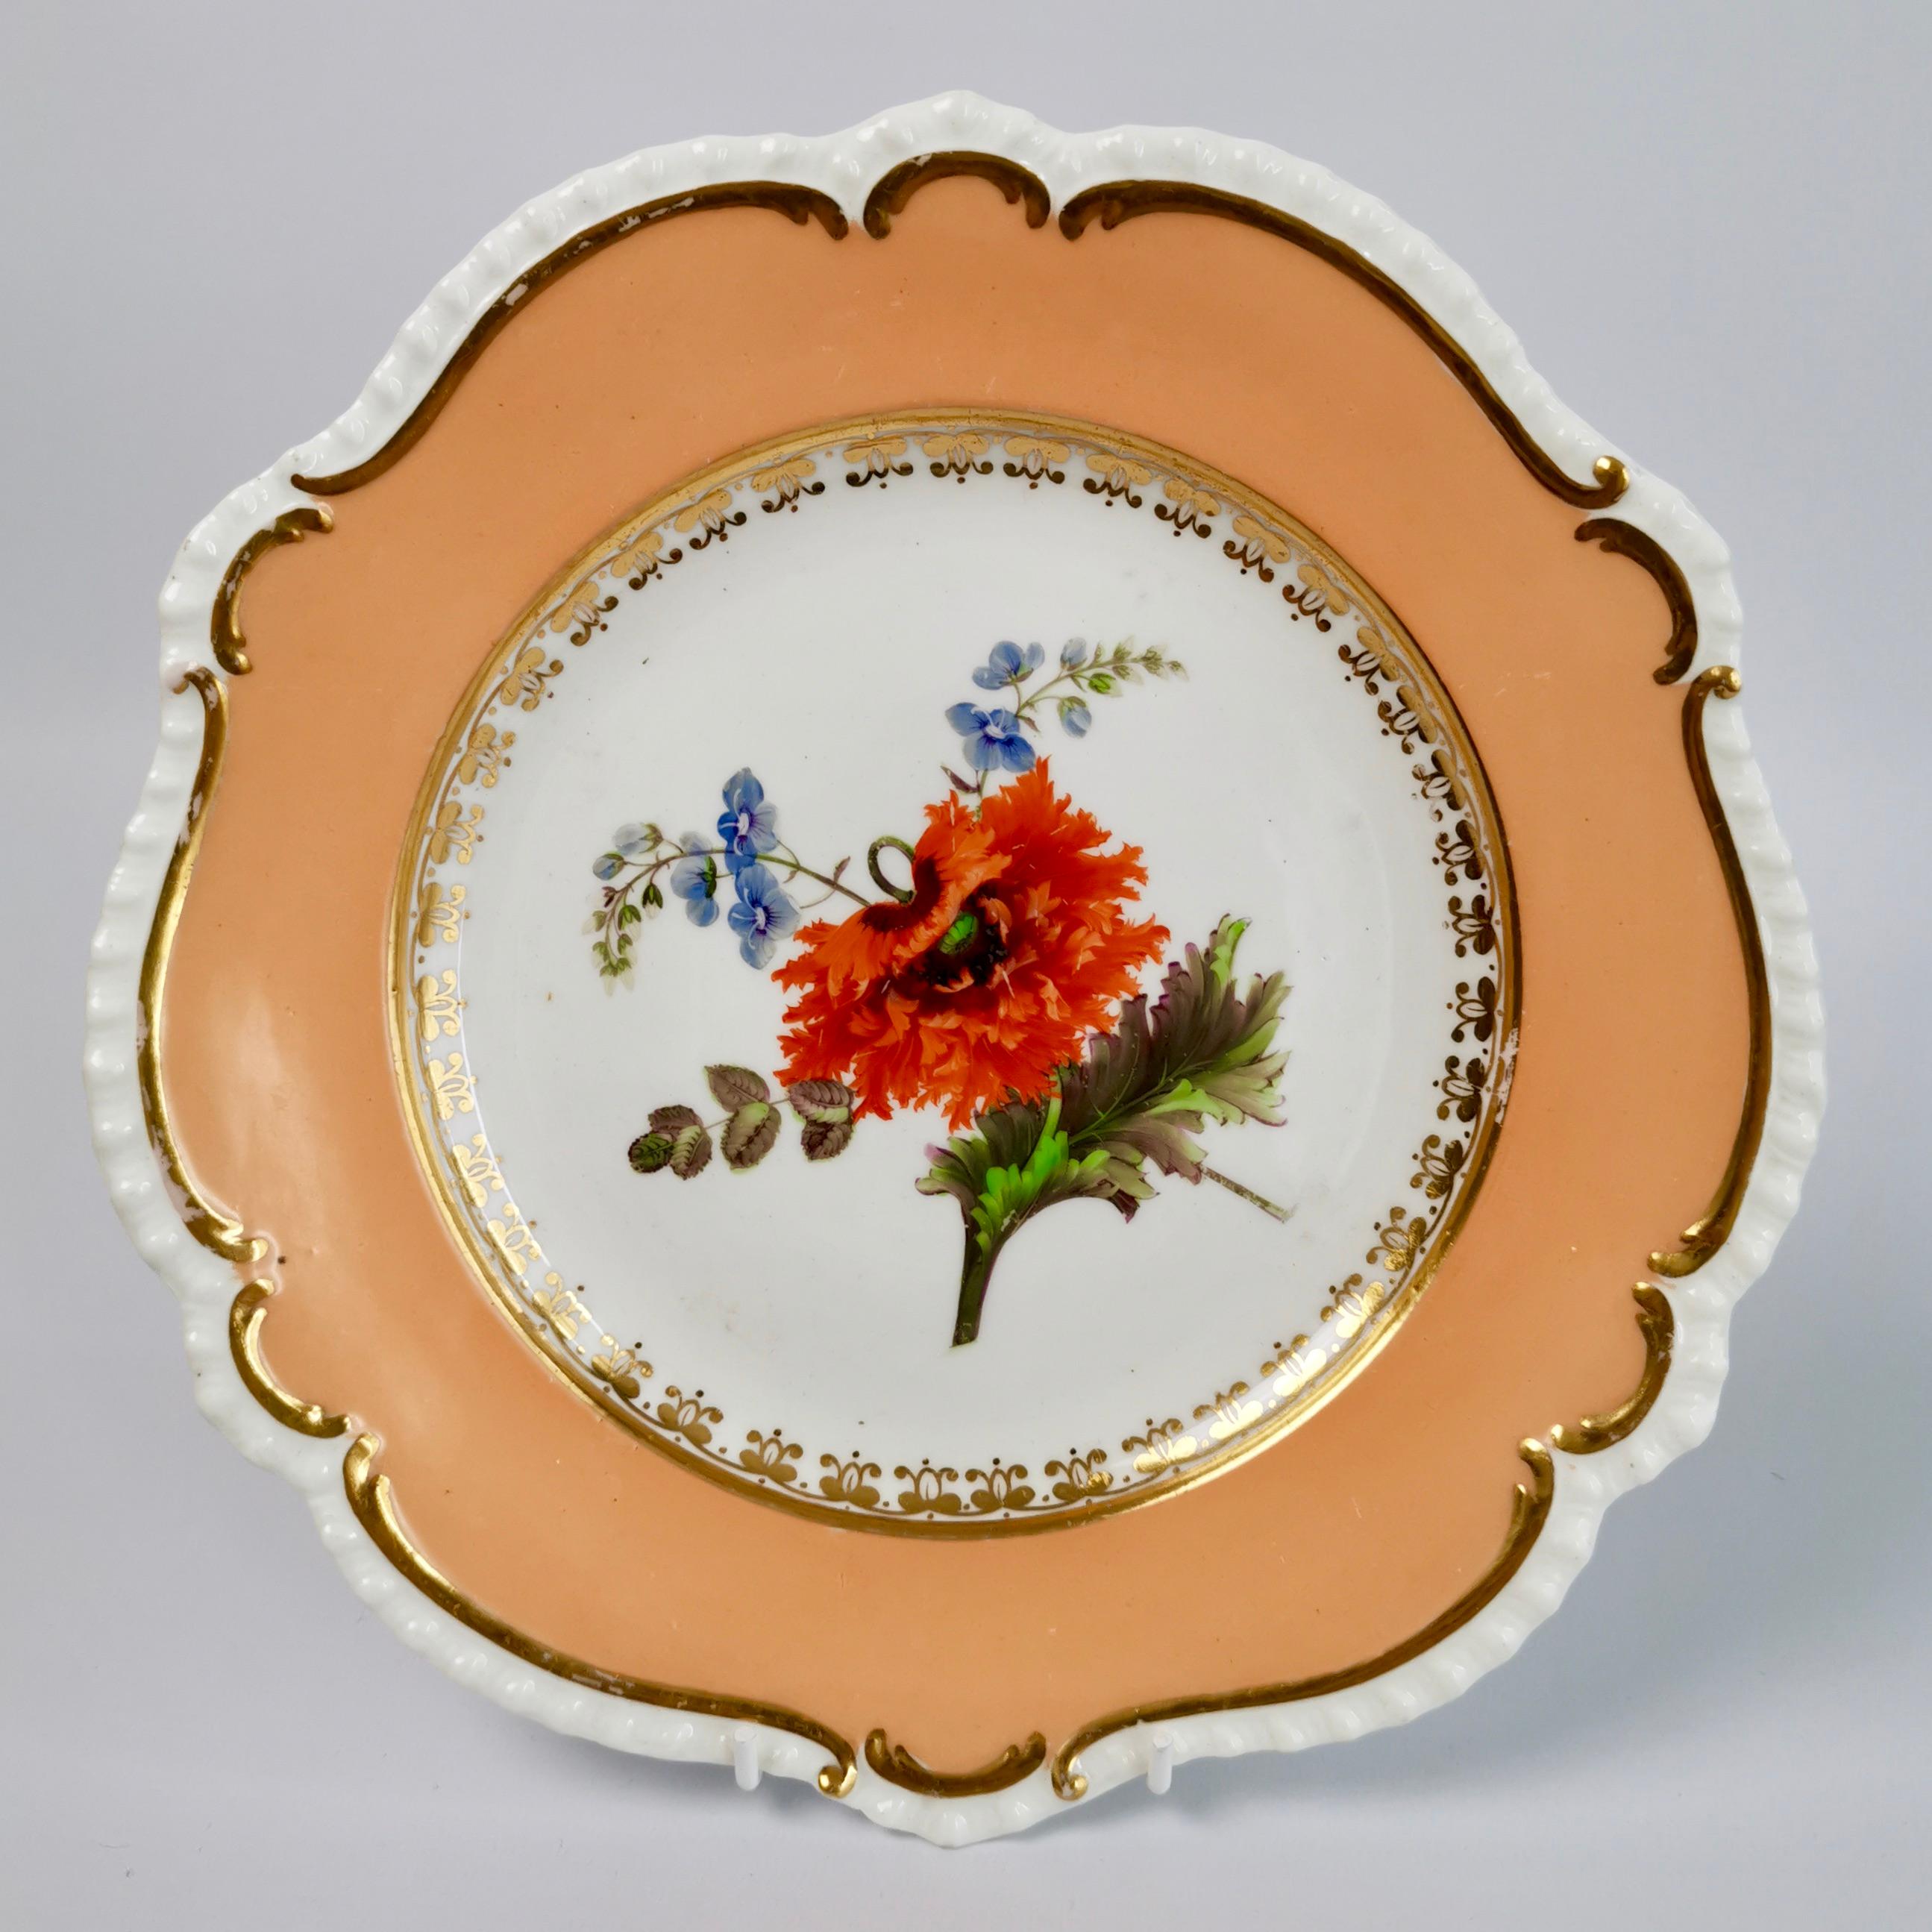 English Coalport Set of 4 Plates, Peach with Flowers, Porcelain, Regency 1820-1825